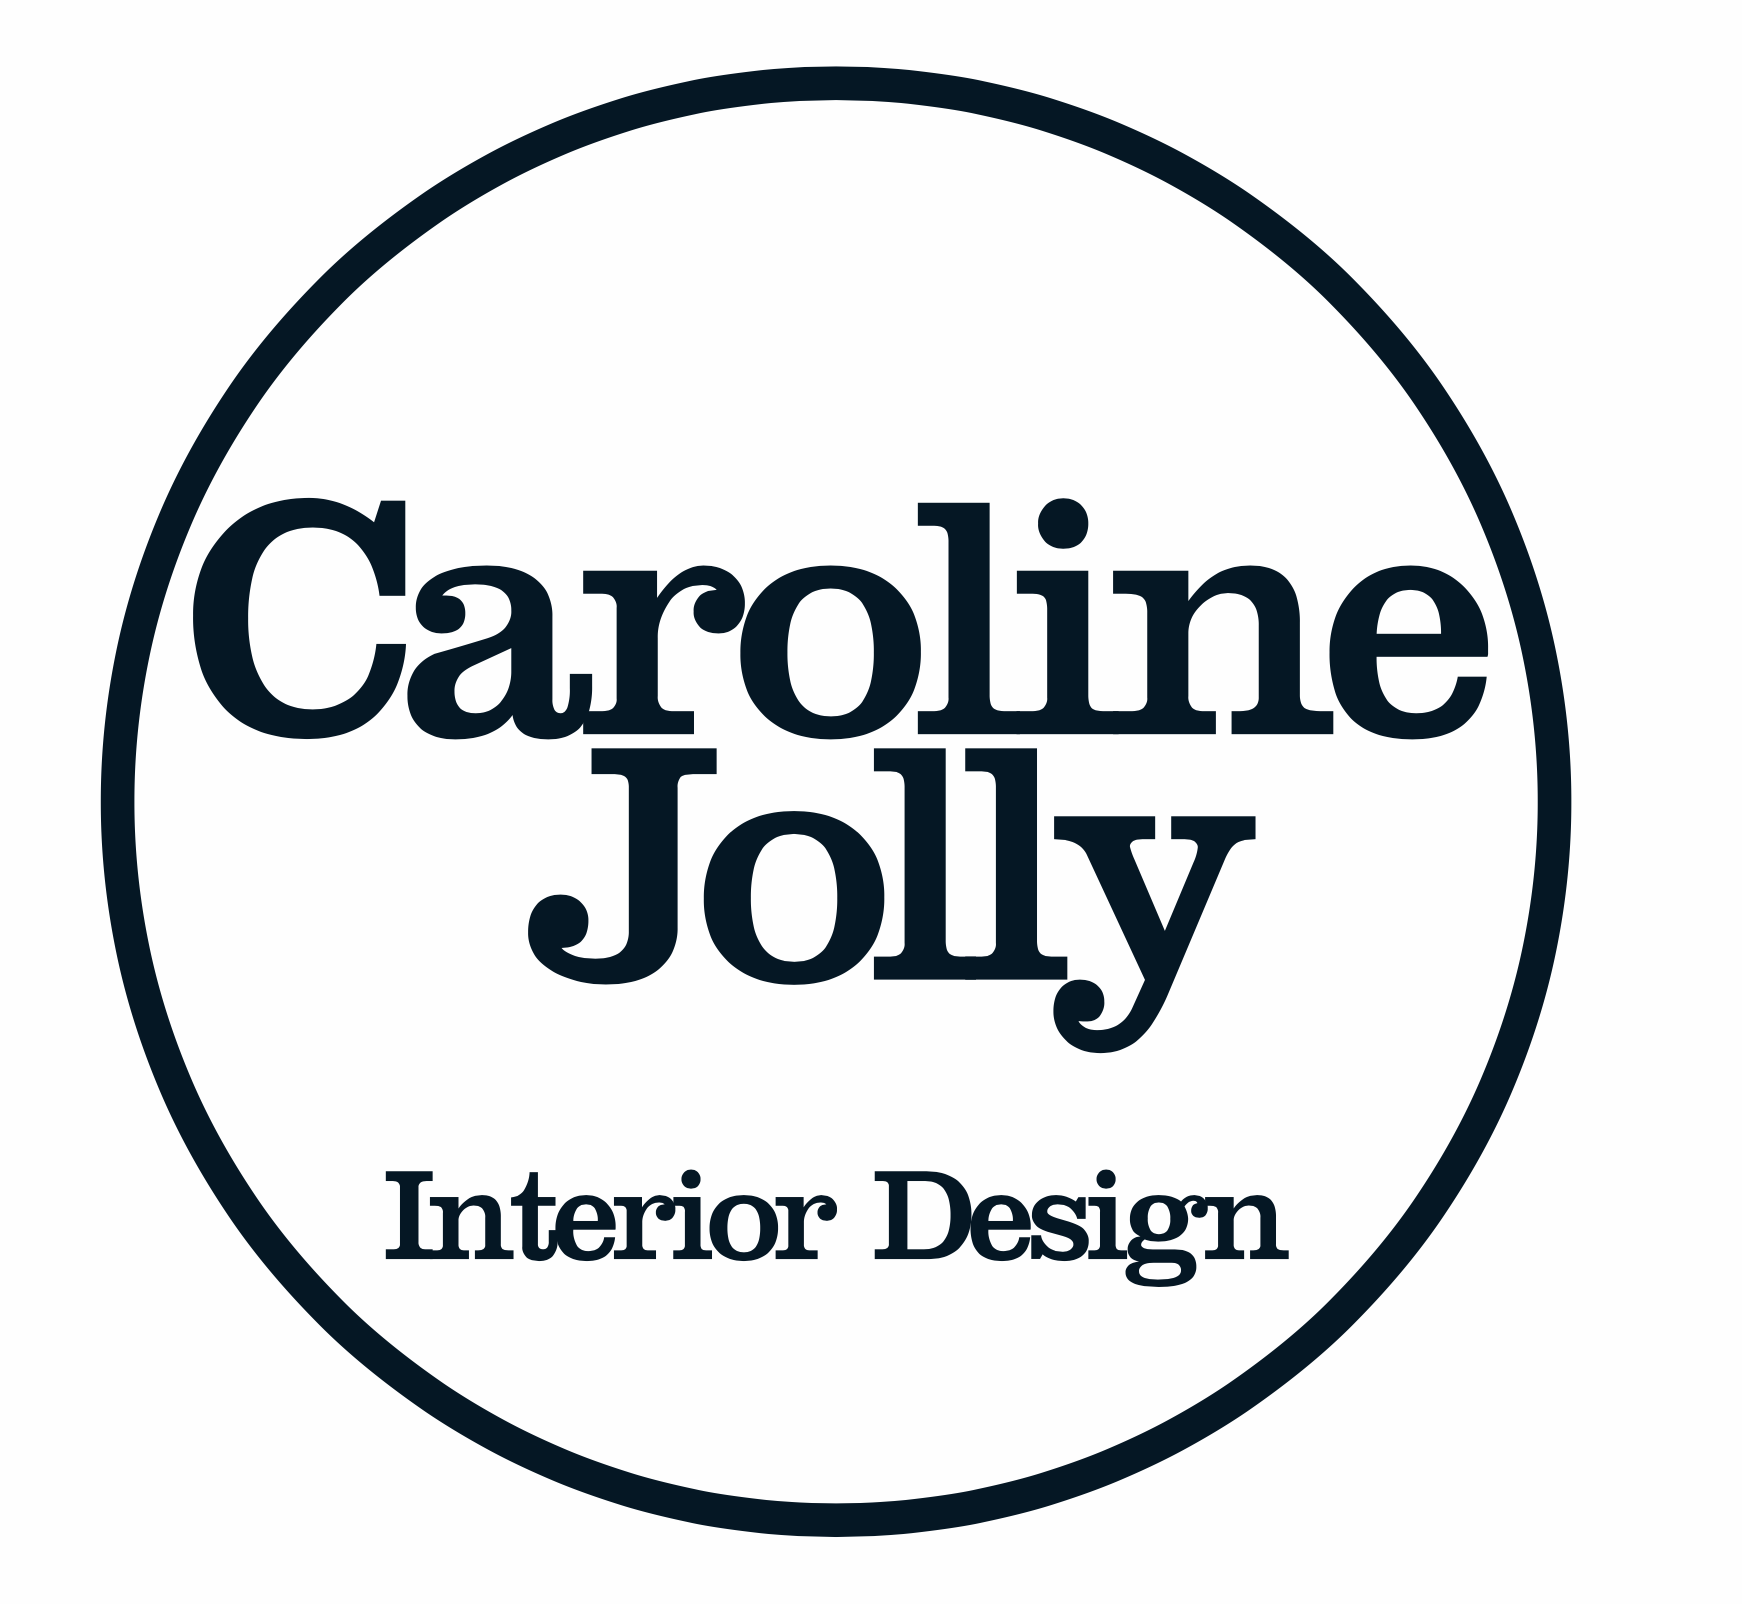 Caroline Jolly Interiors: Experienced Interior Designer in Wollongong